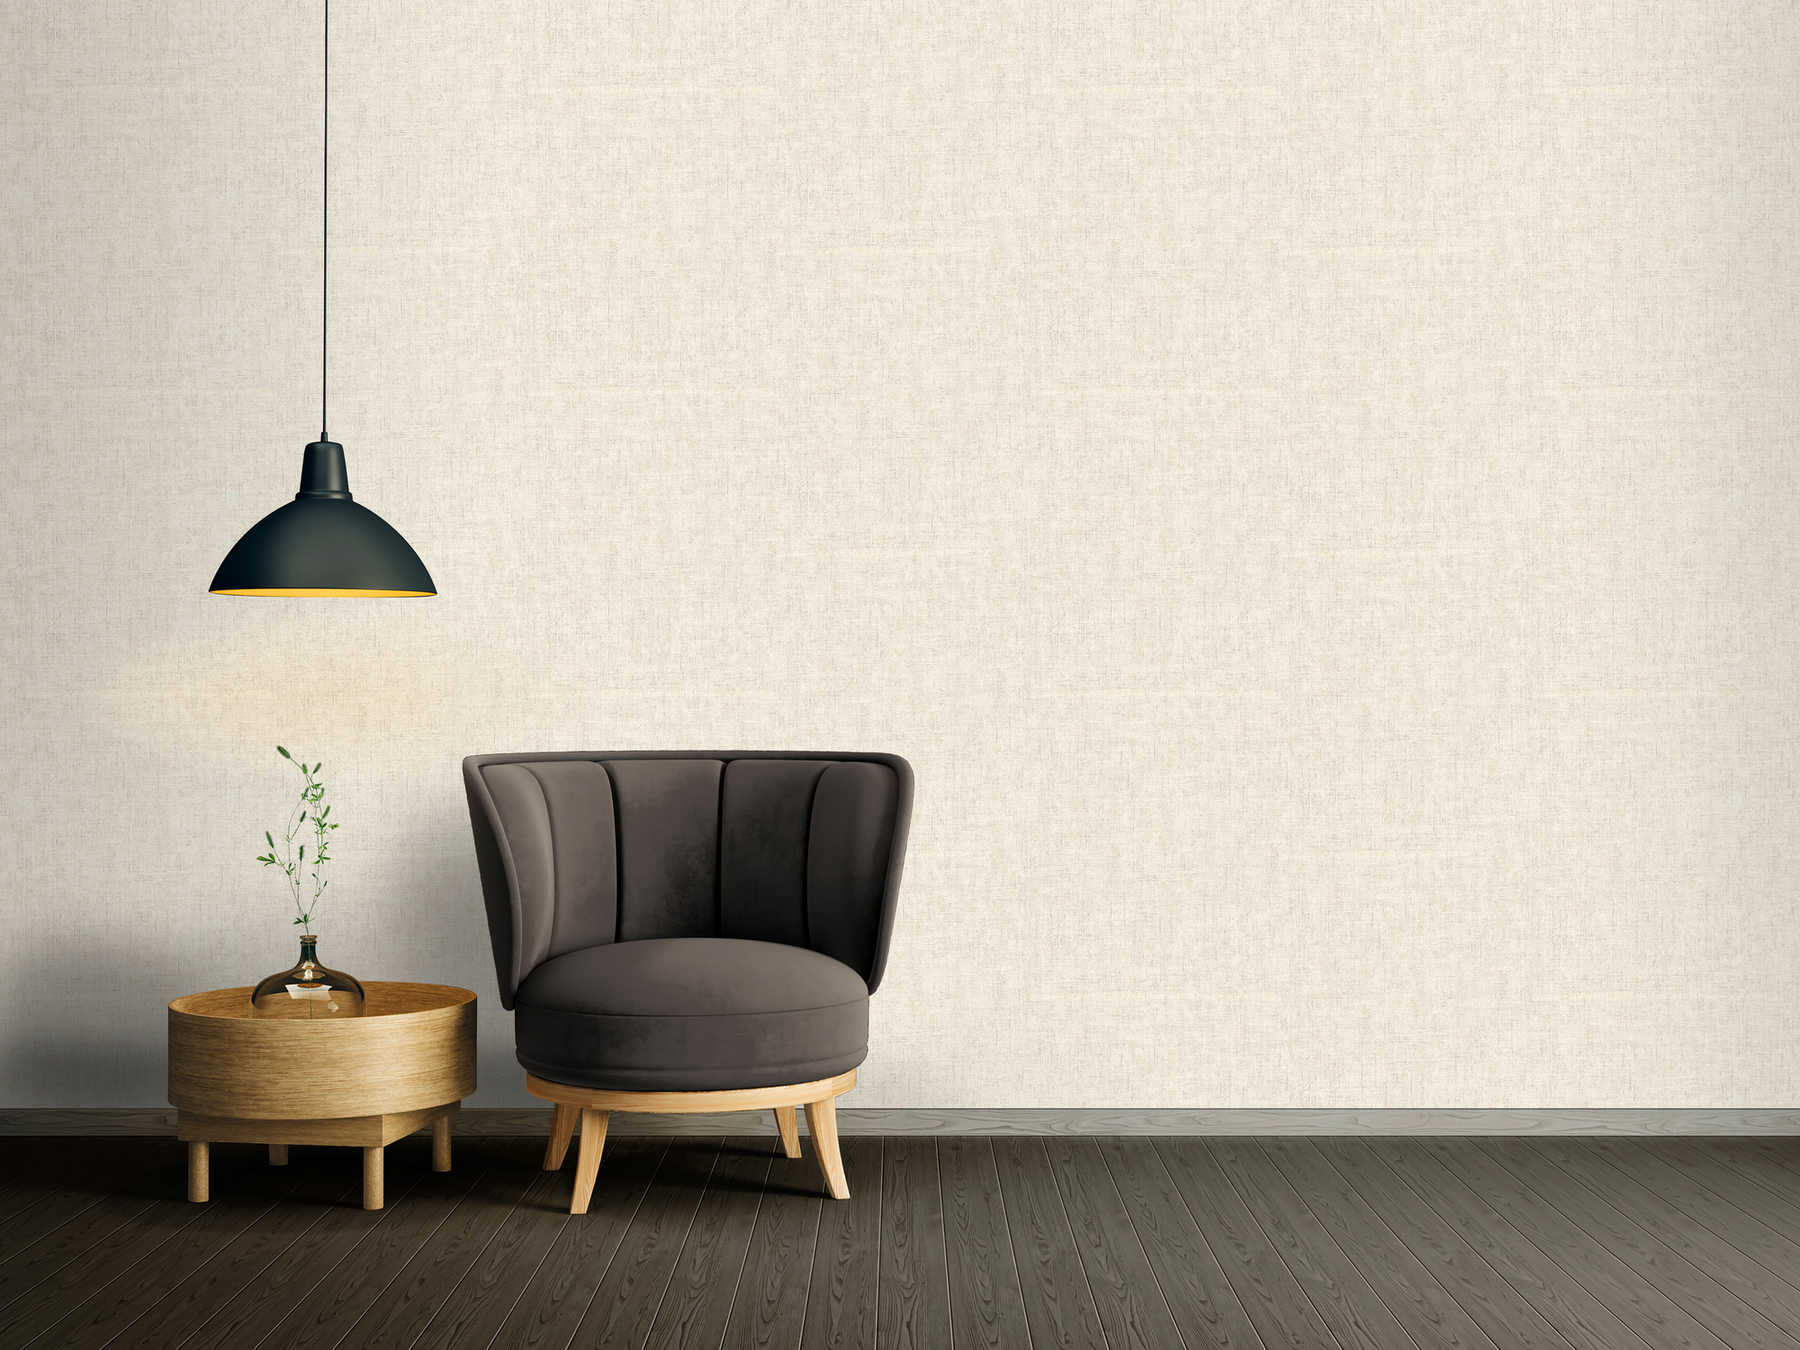             Plain wallpaper mottled & natural design - Beige, Créme
        